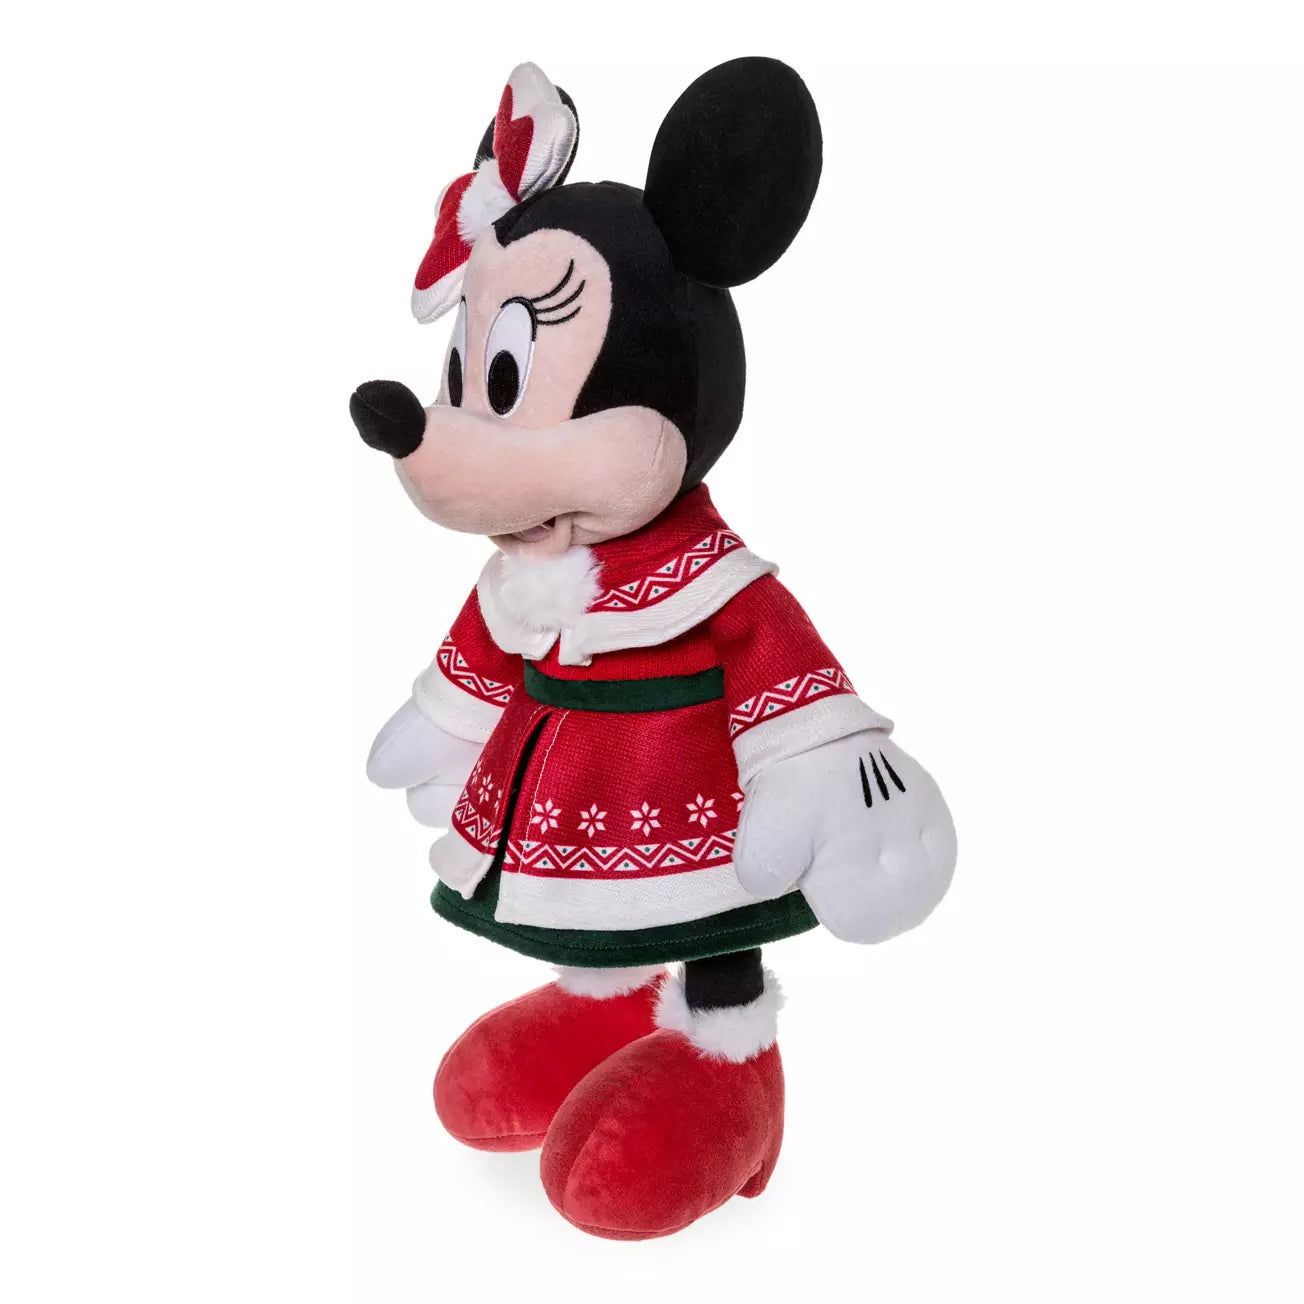 “Pre-order” HKDL - Minnie Mouse Holiday Medium Plush